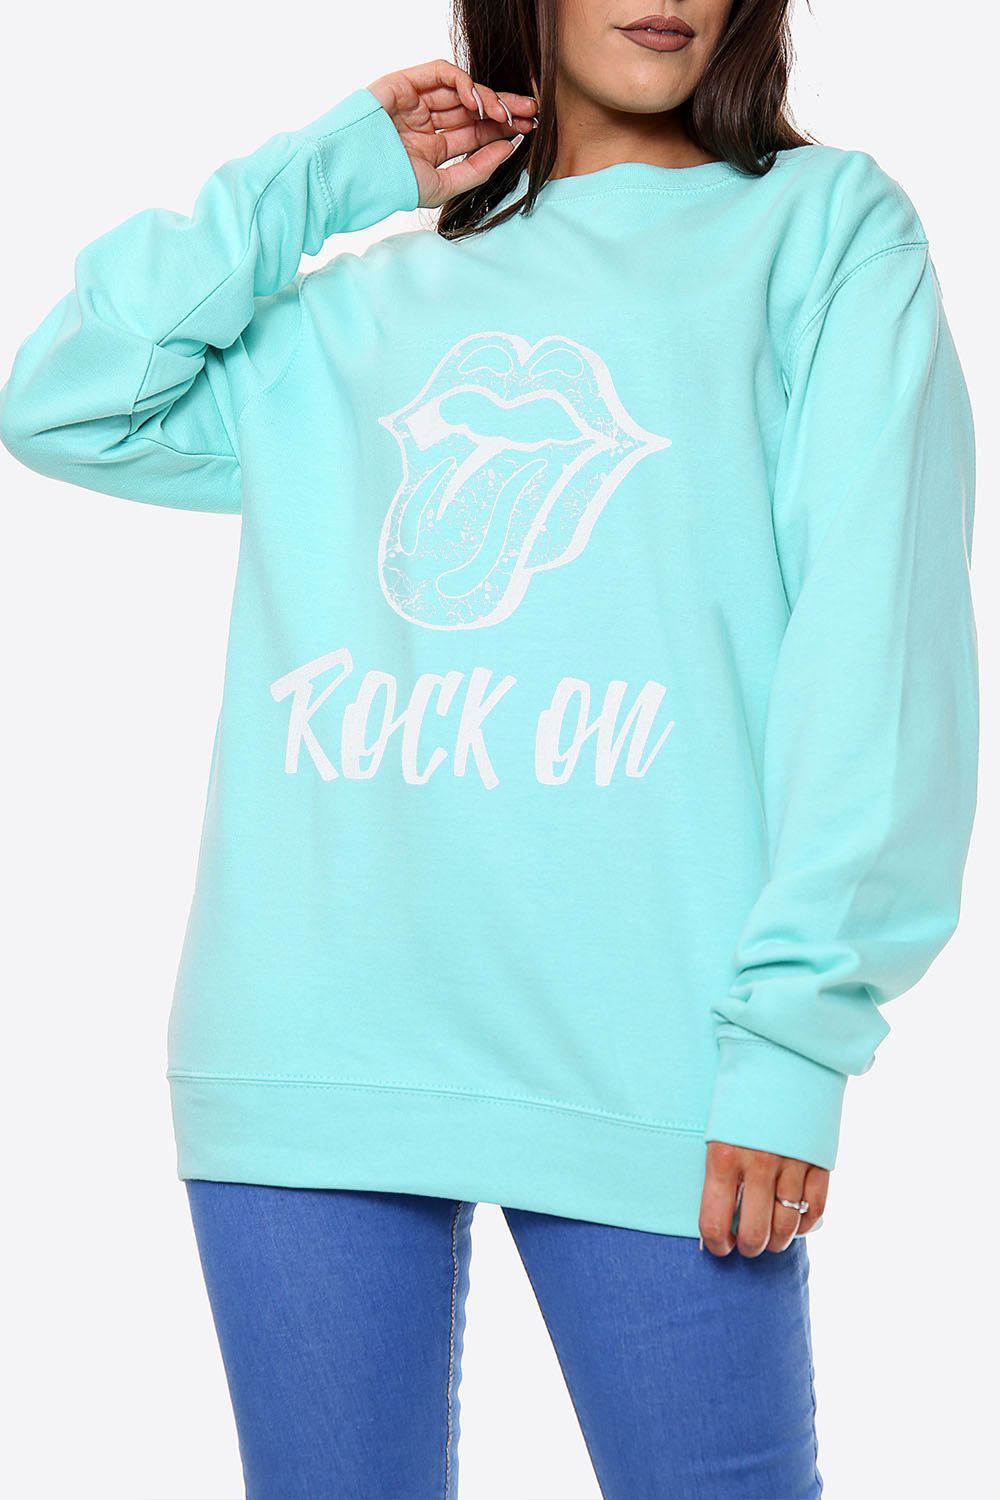 Rock On Slogan Oversized Sweatshirt (Pack of 6)